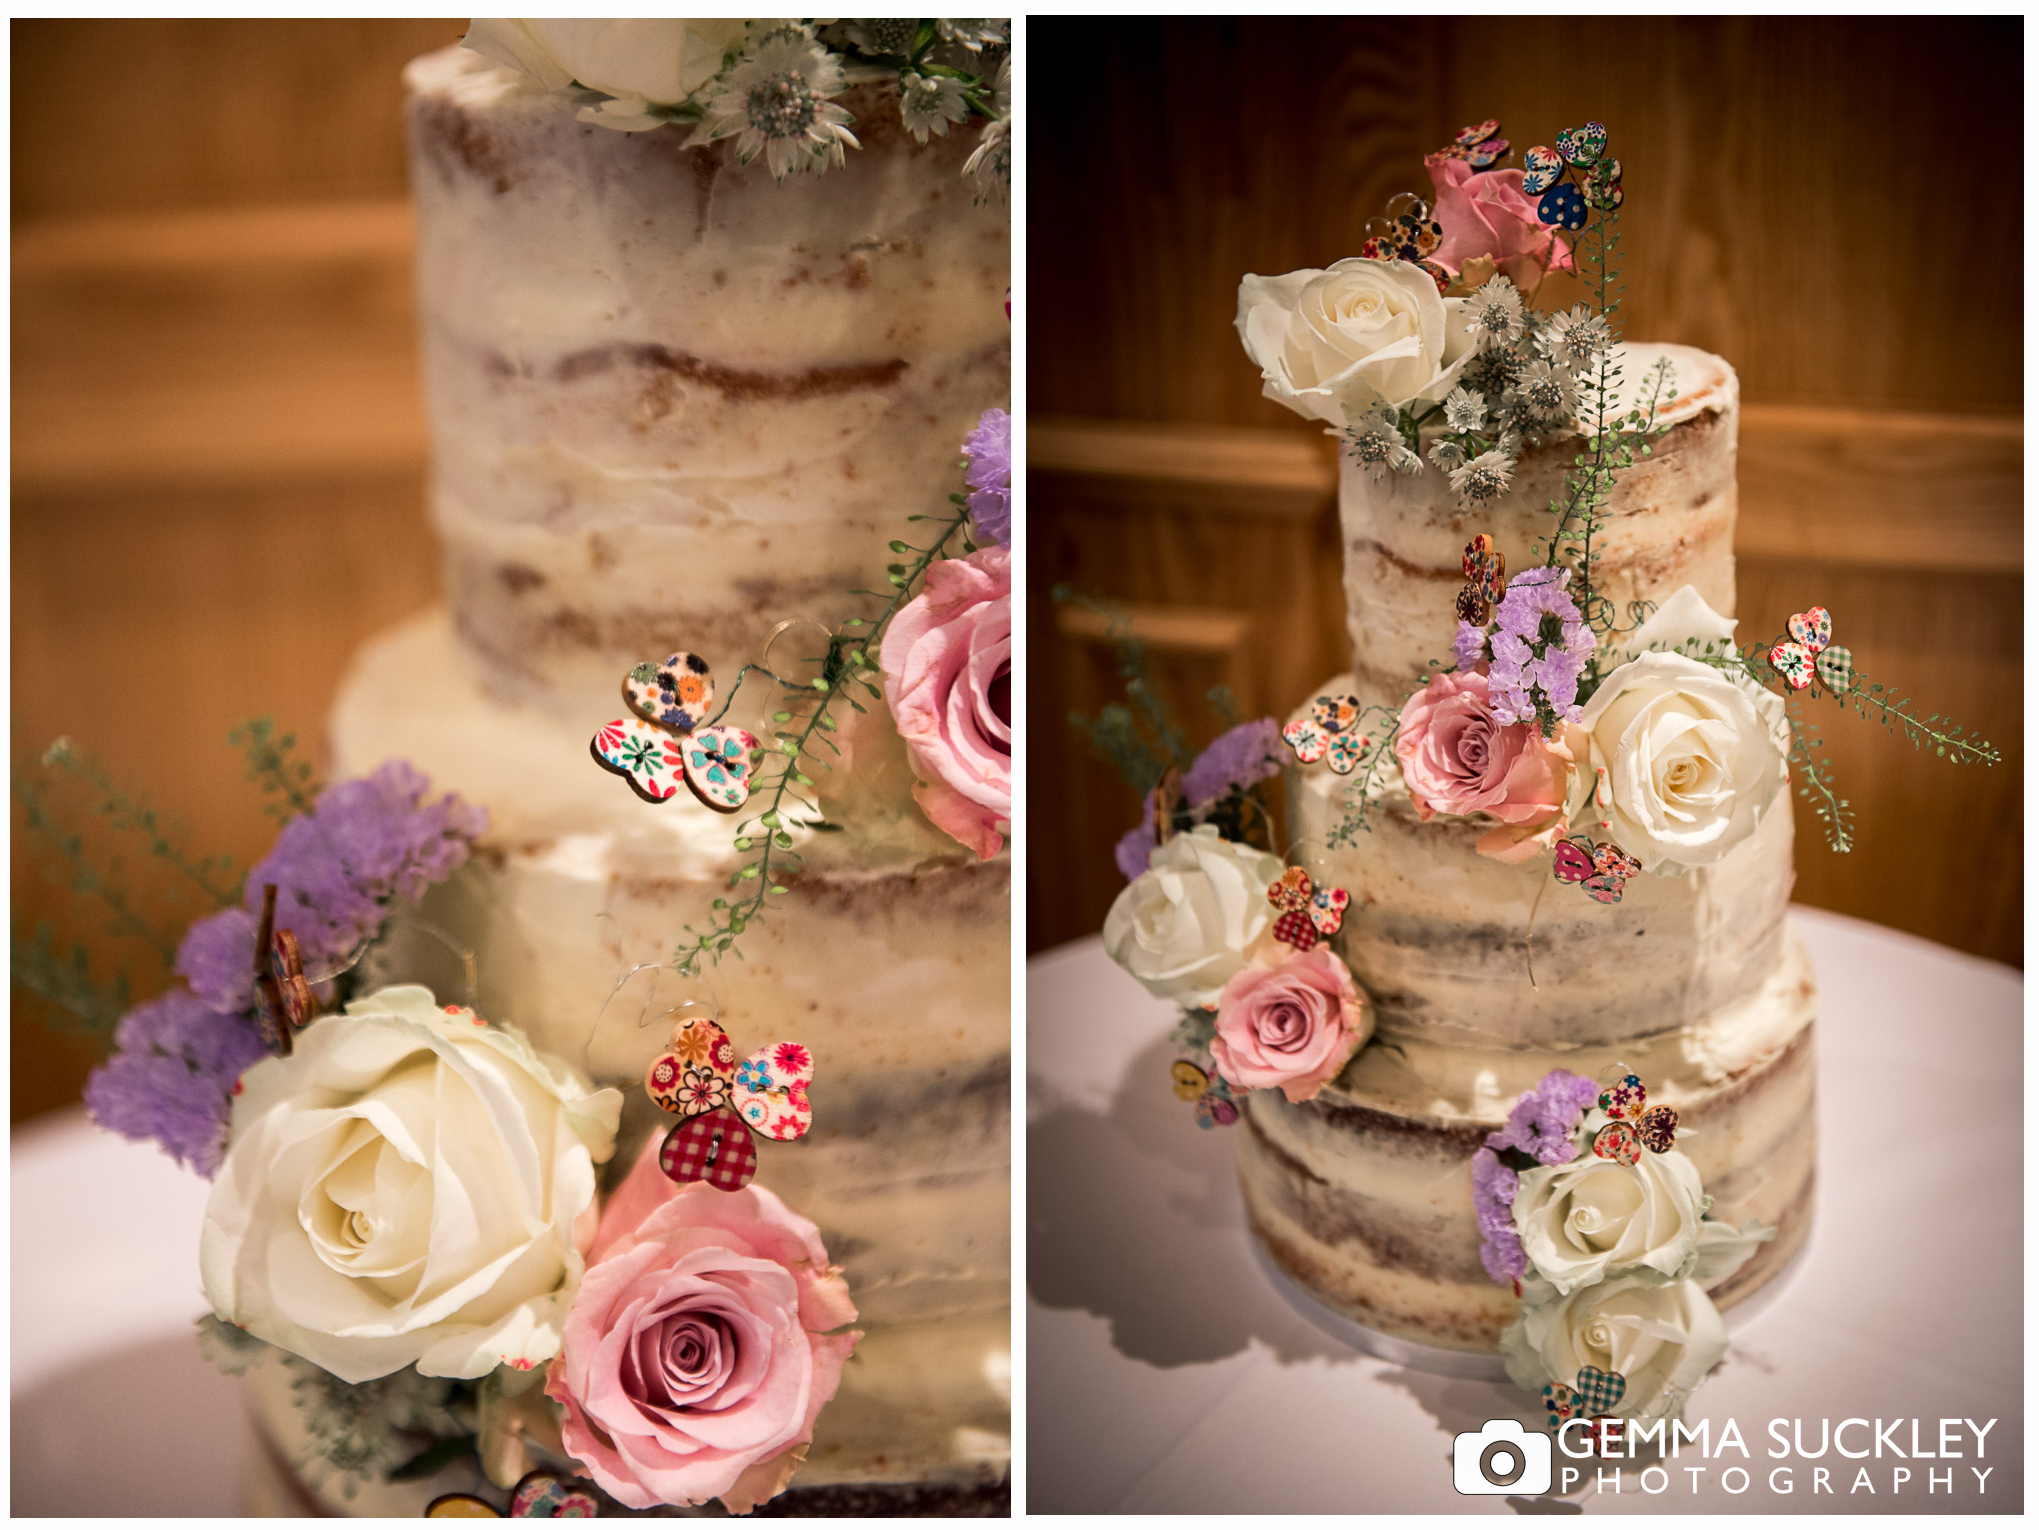 Wedding cake decorated with wedding flowers